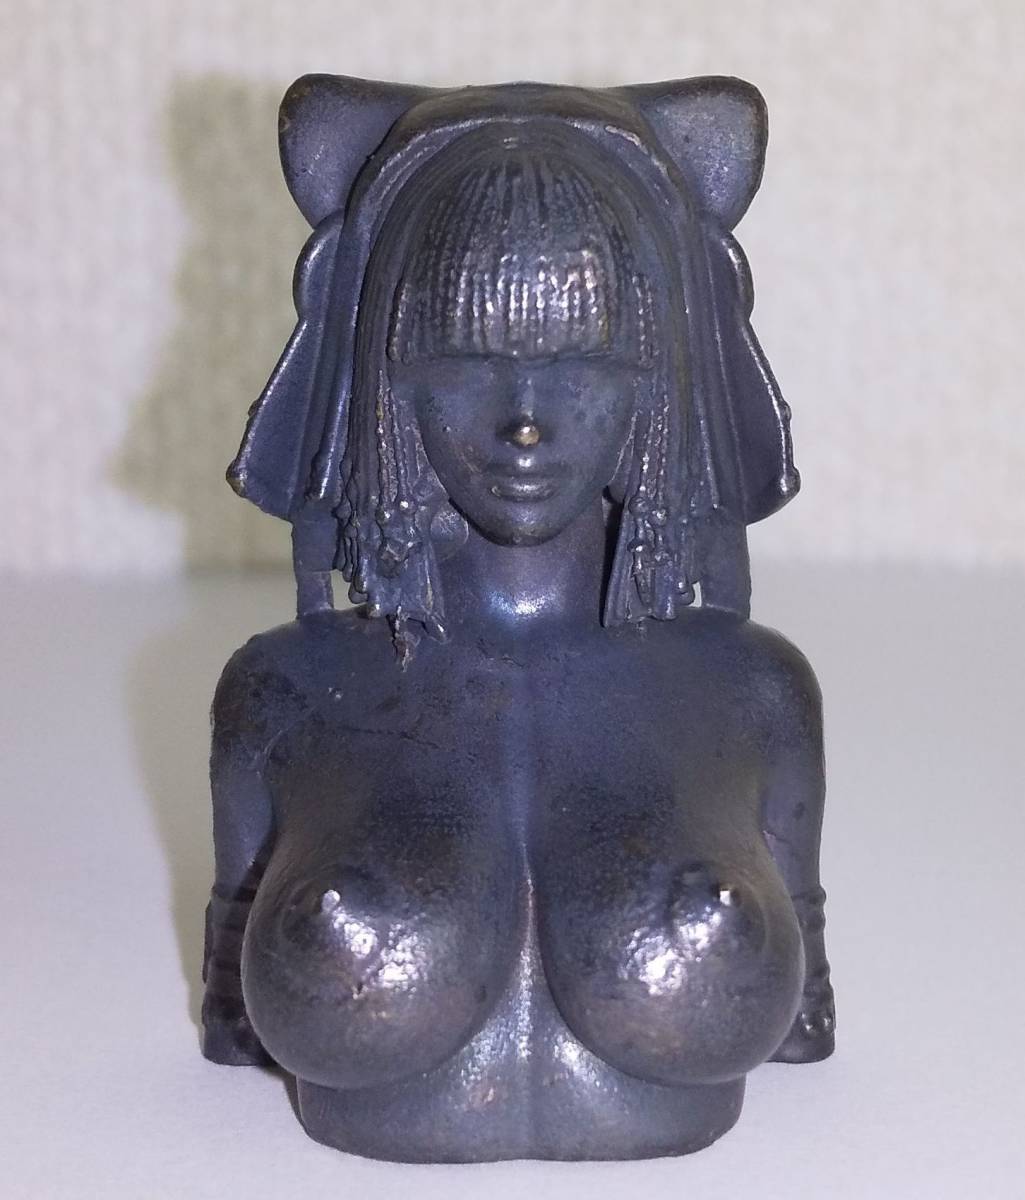 Yahoo!オークション -「裸婦像」(西洋彫刻) (彫刻、オブジェ)の落札